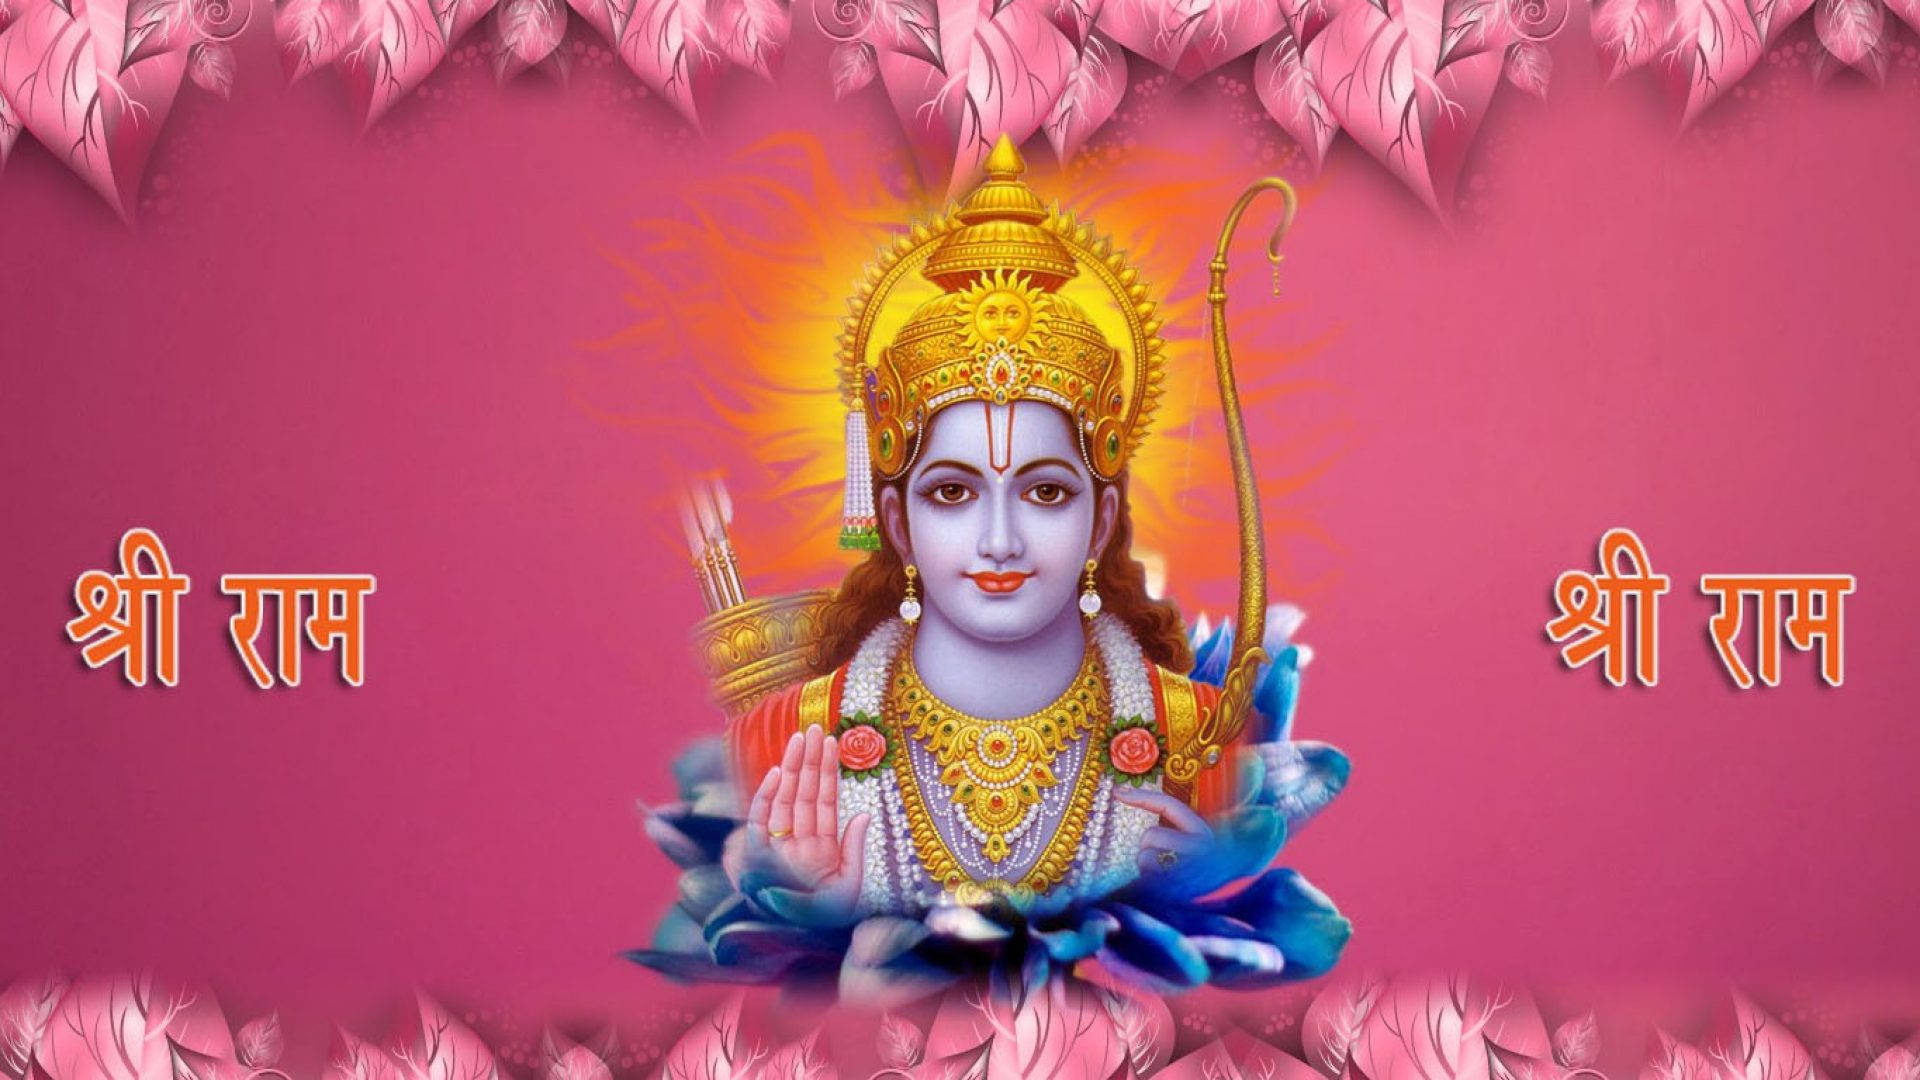 Hindu God Ram Ji In Pink Background